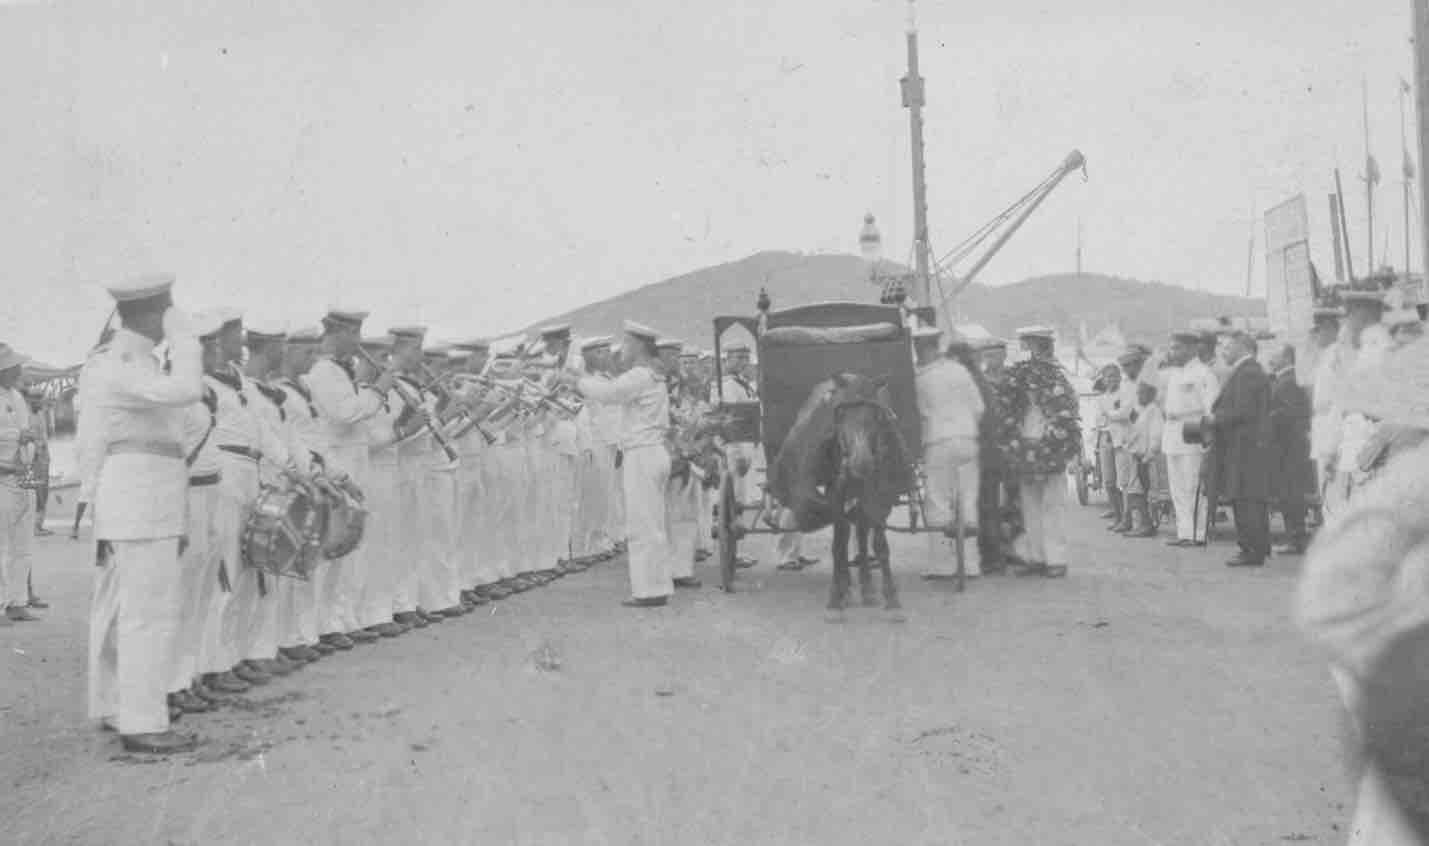 Feb 6, 1914, Funeral in St. Thomas, Danish West Indies for German marine